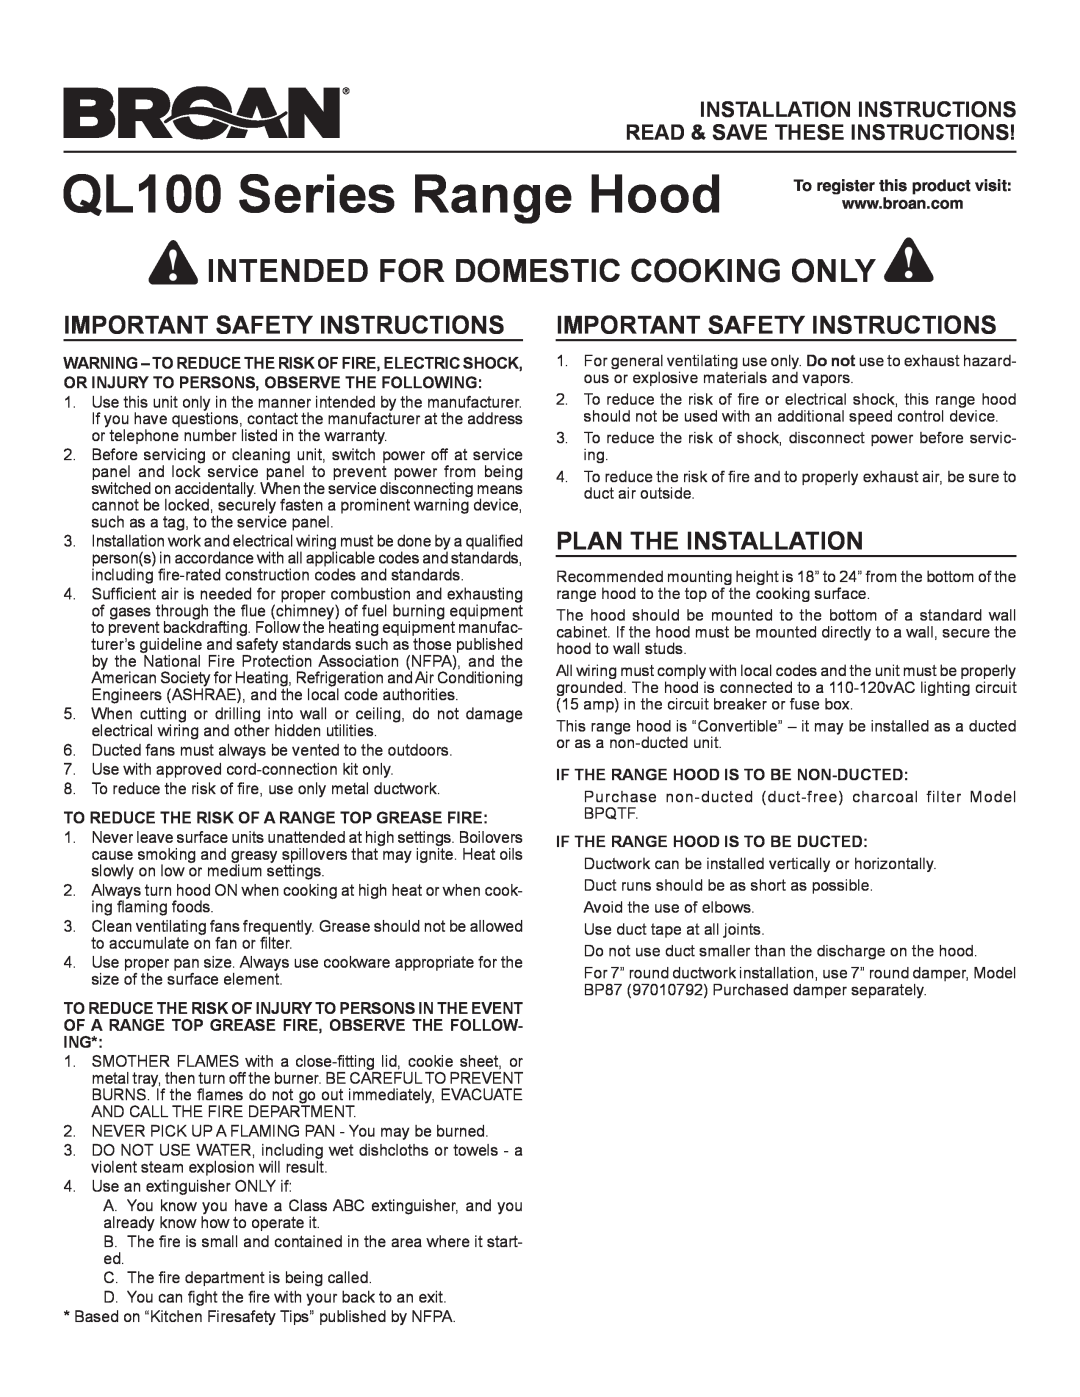 Broan Ql100 Series installation instructions Important Safety Instructions, Plan The Installation, QL100 Series Range Hood 